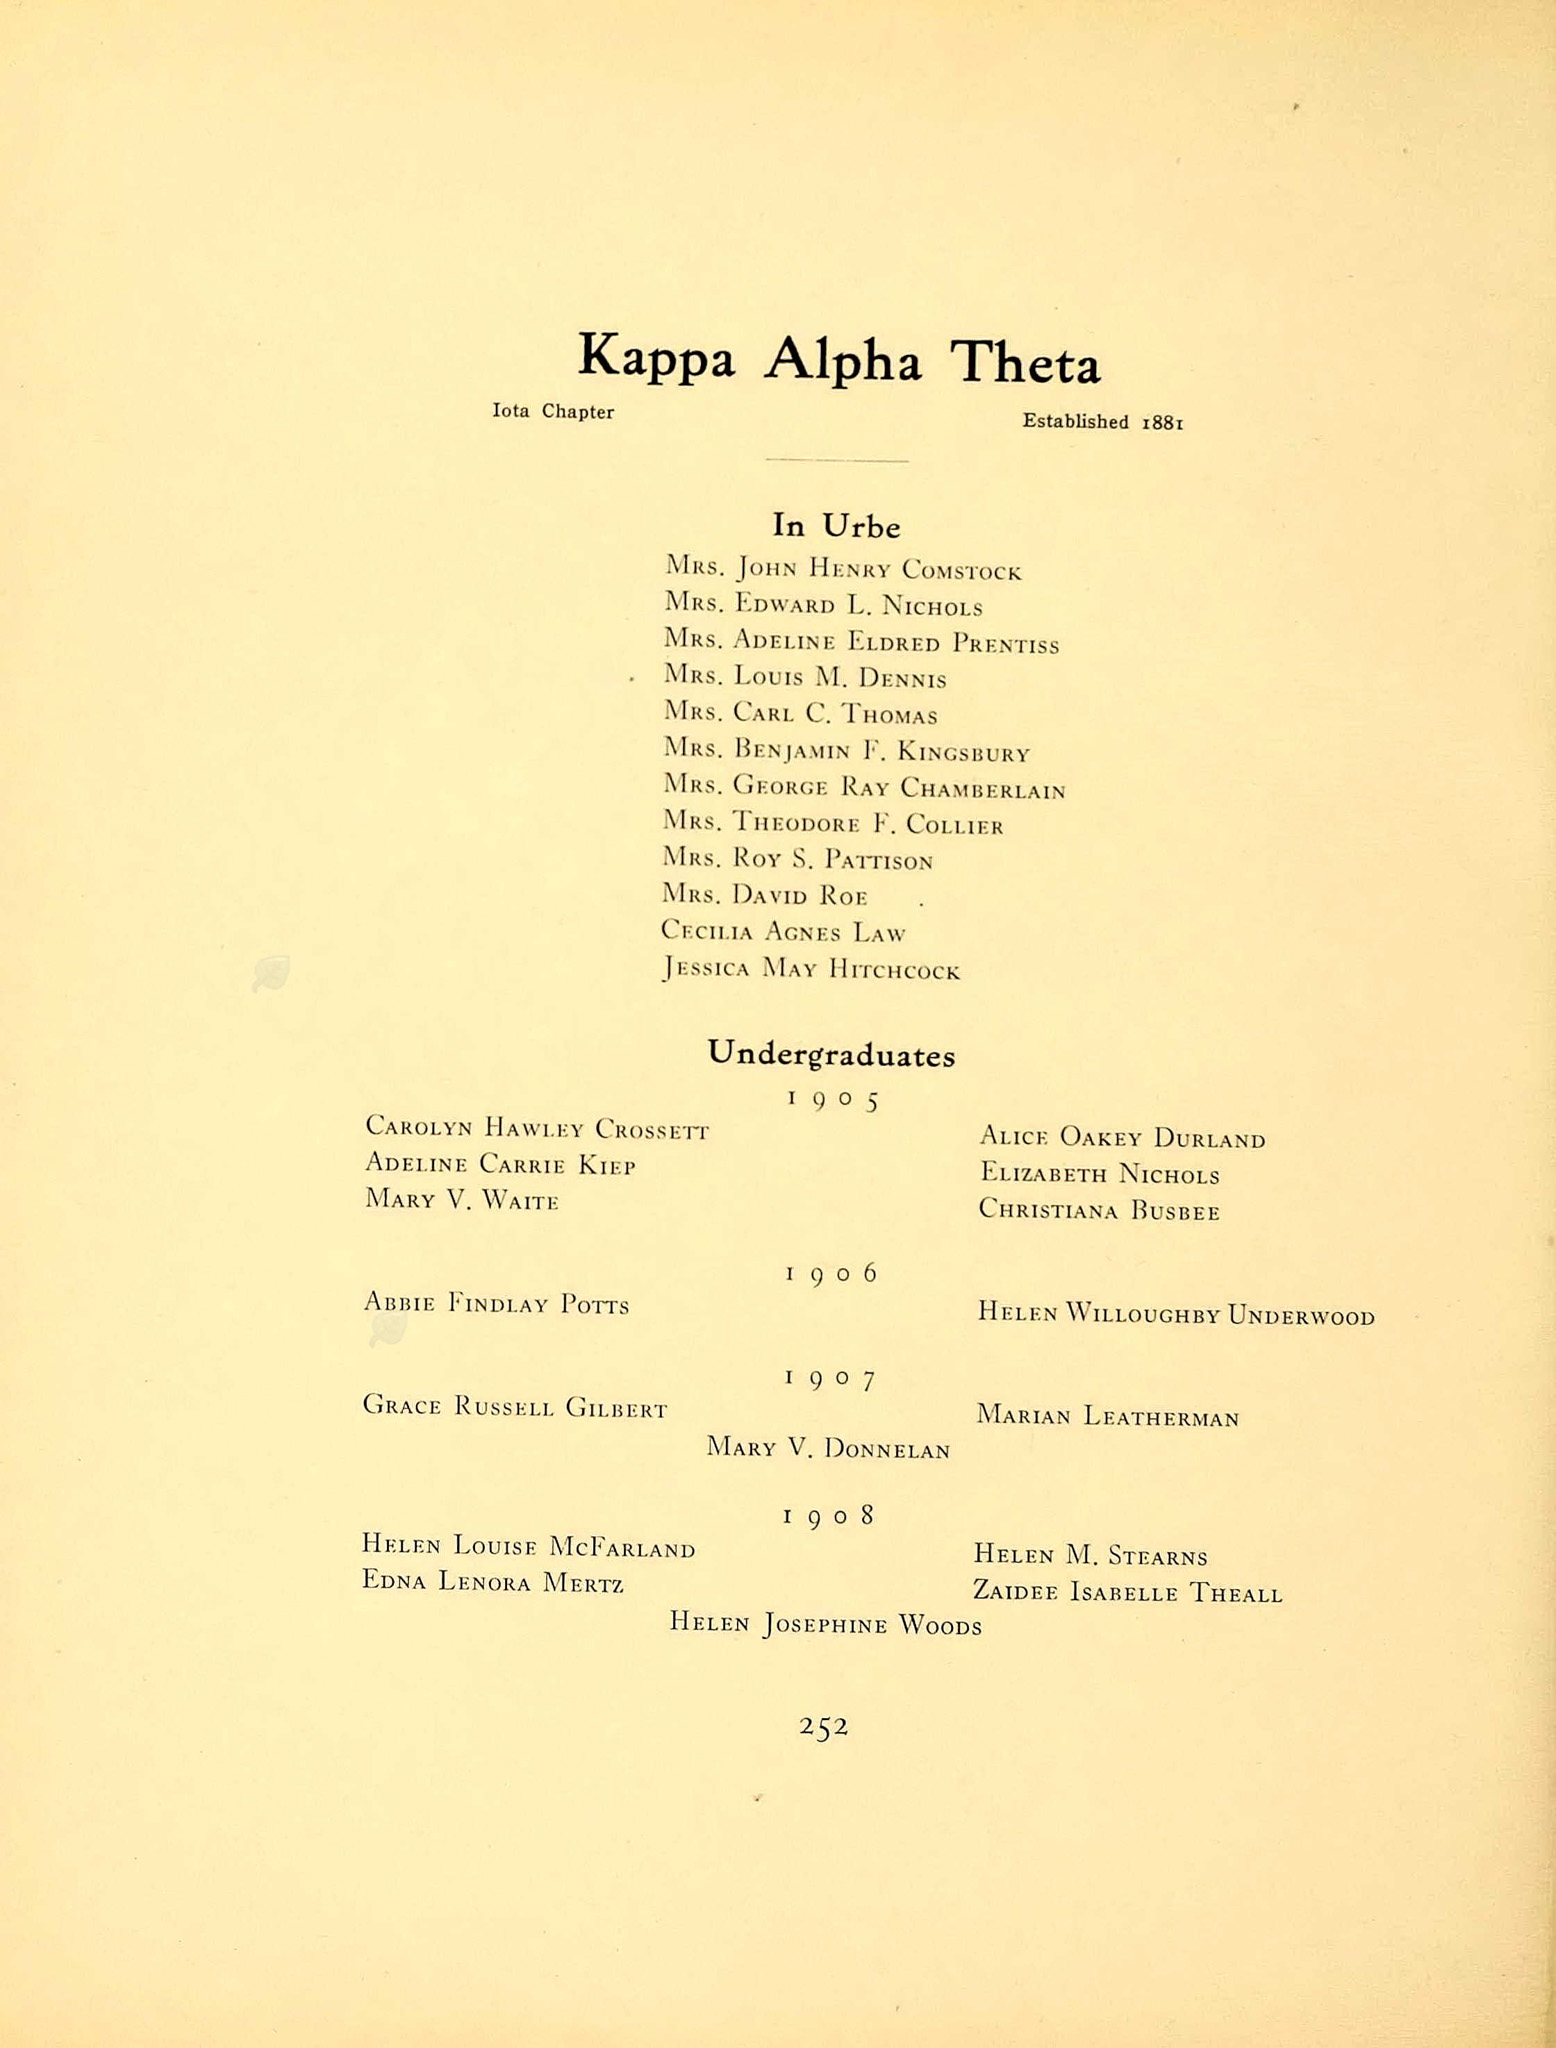 Helen J Woods in Kappa Alpha Theta